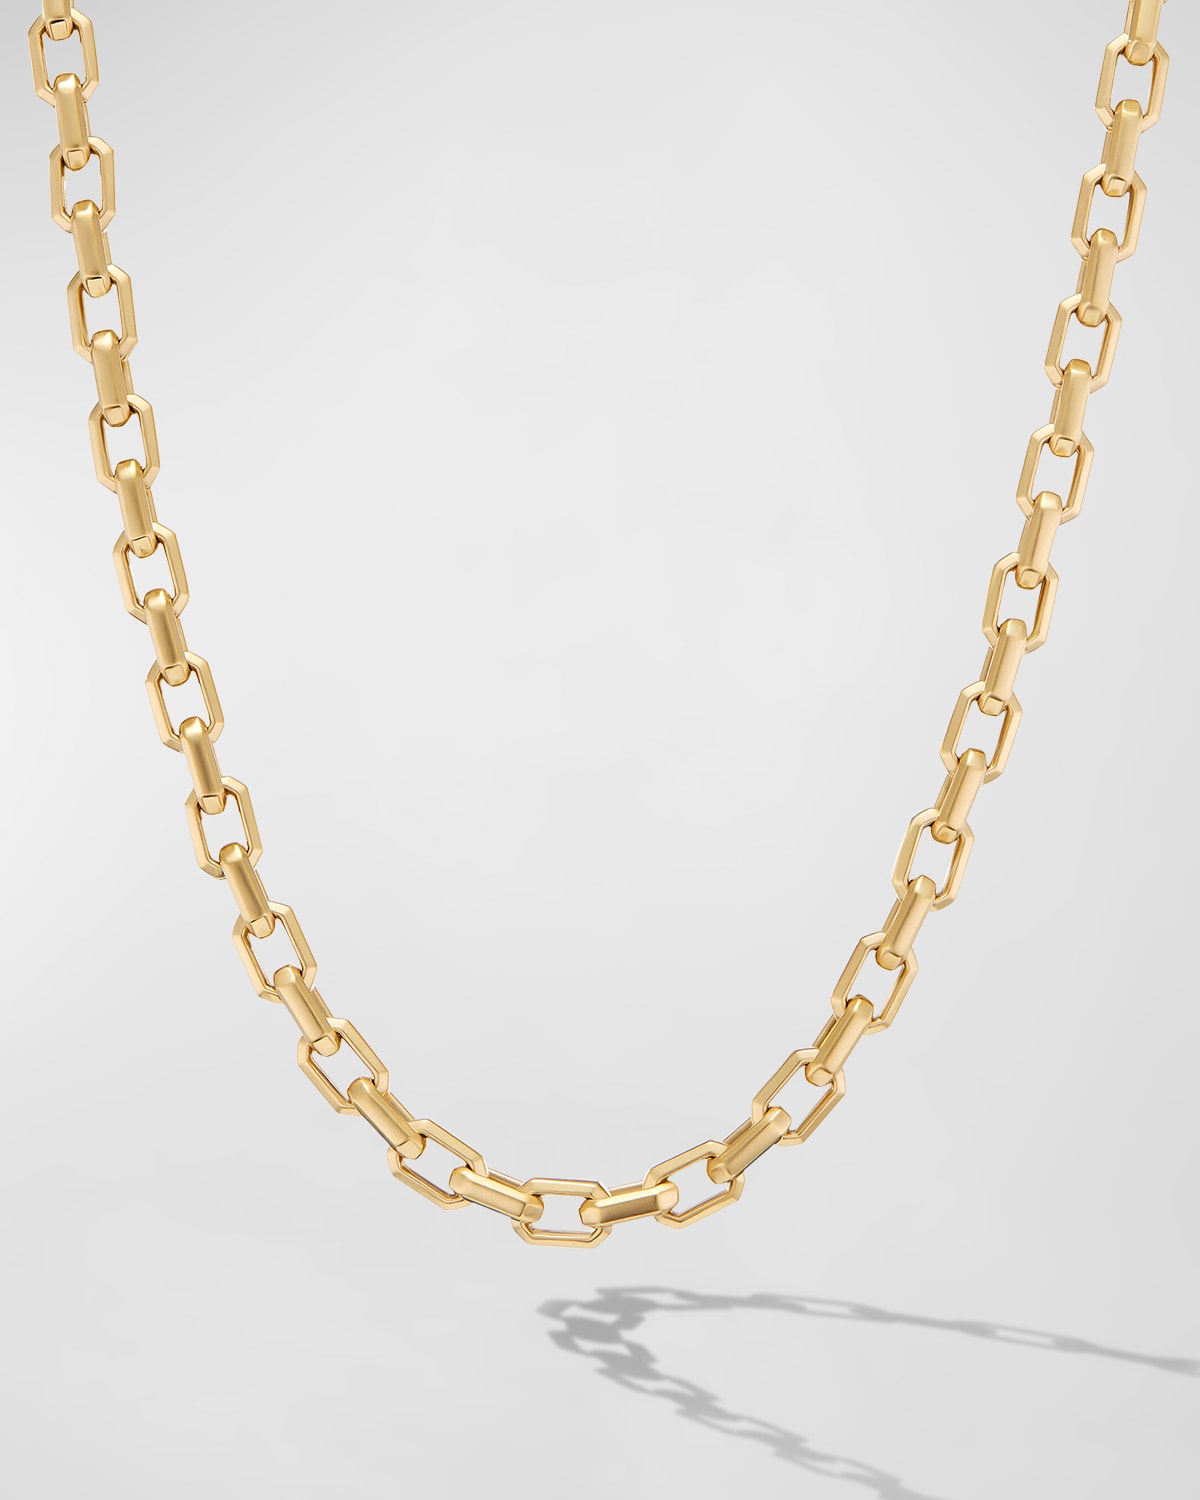 David Yurman Men's Streamline Heirloom Link Necklace in 18K Gold, 5.5mm, 22"L